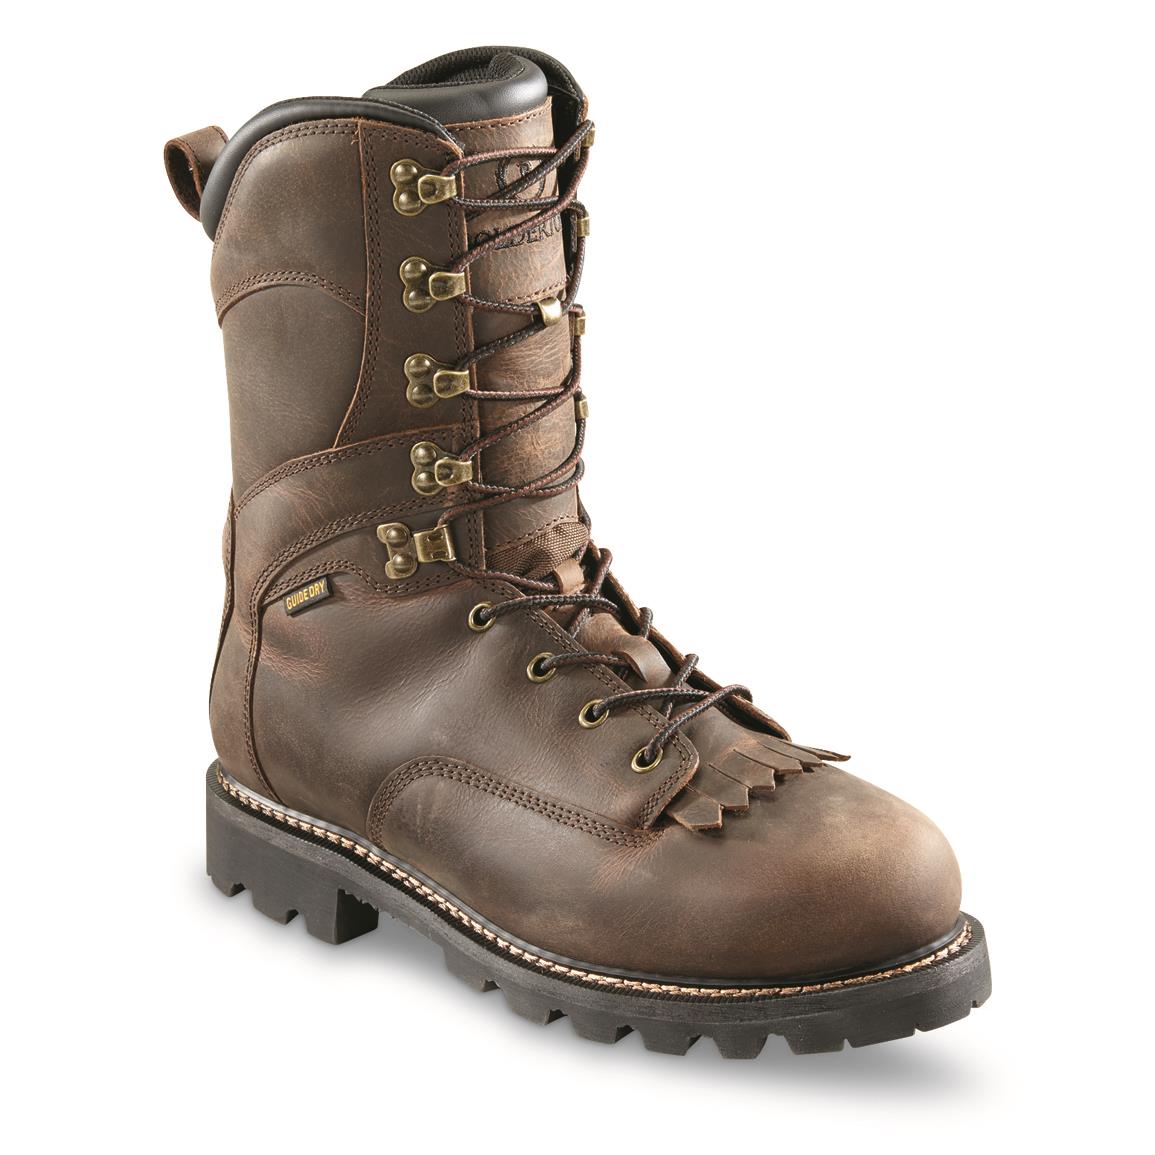 Bolderton Men's Outlands 10" Waterproof 800-gram Insulated Hunting Boots, Brown